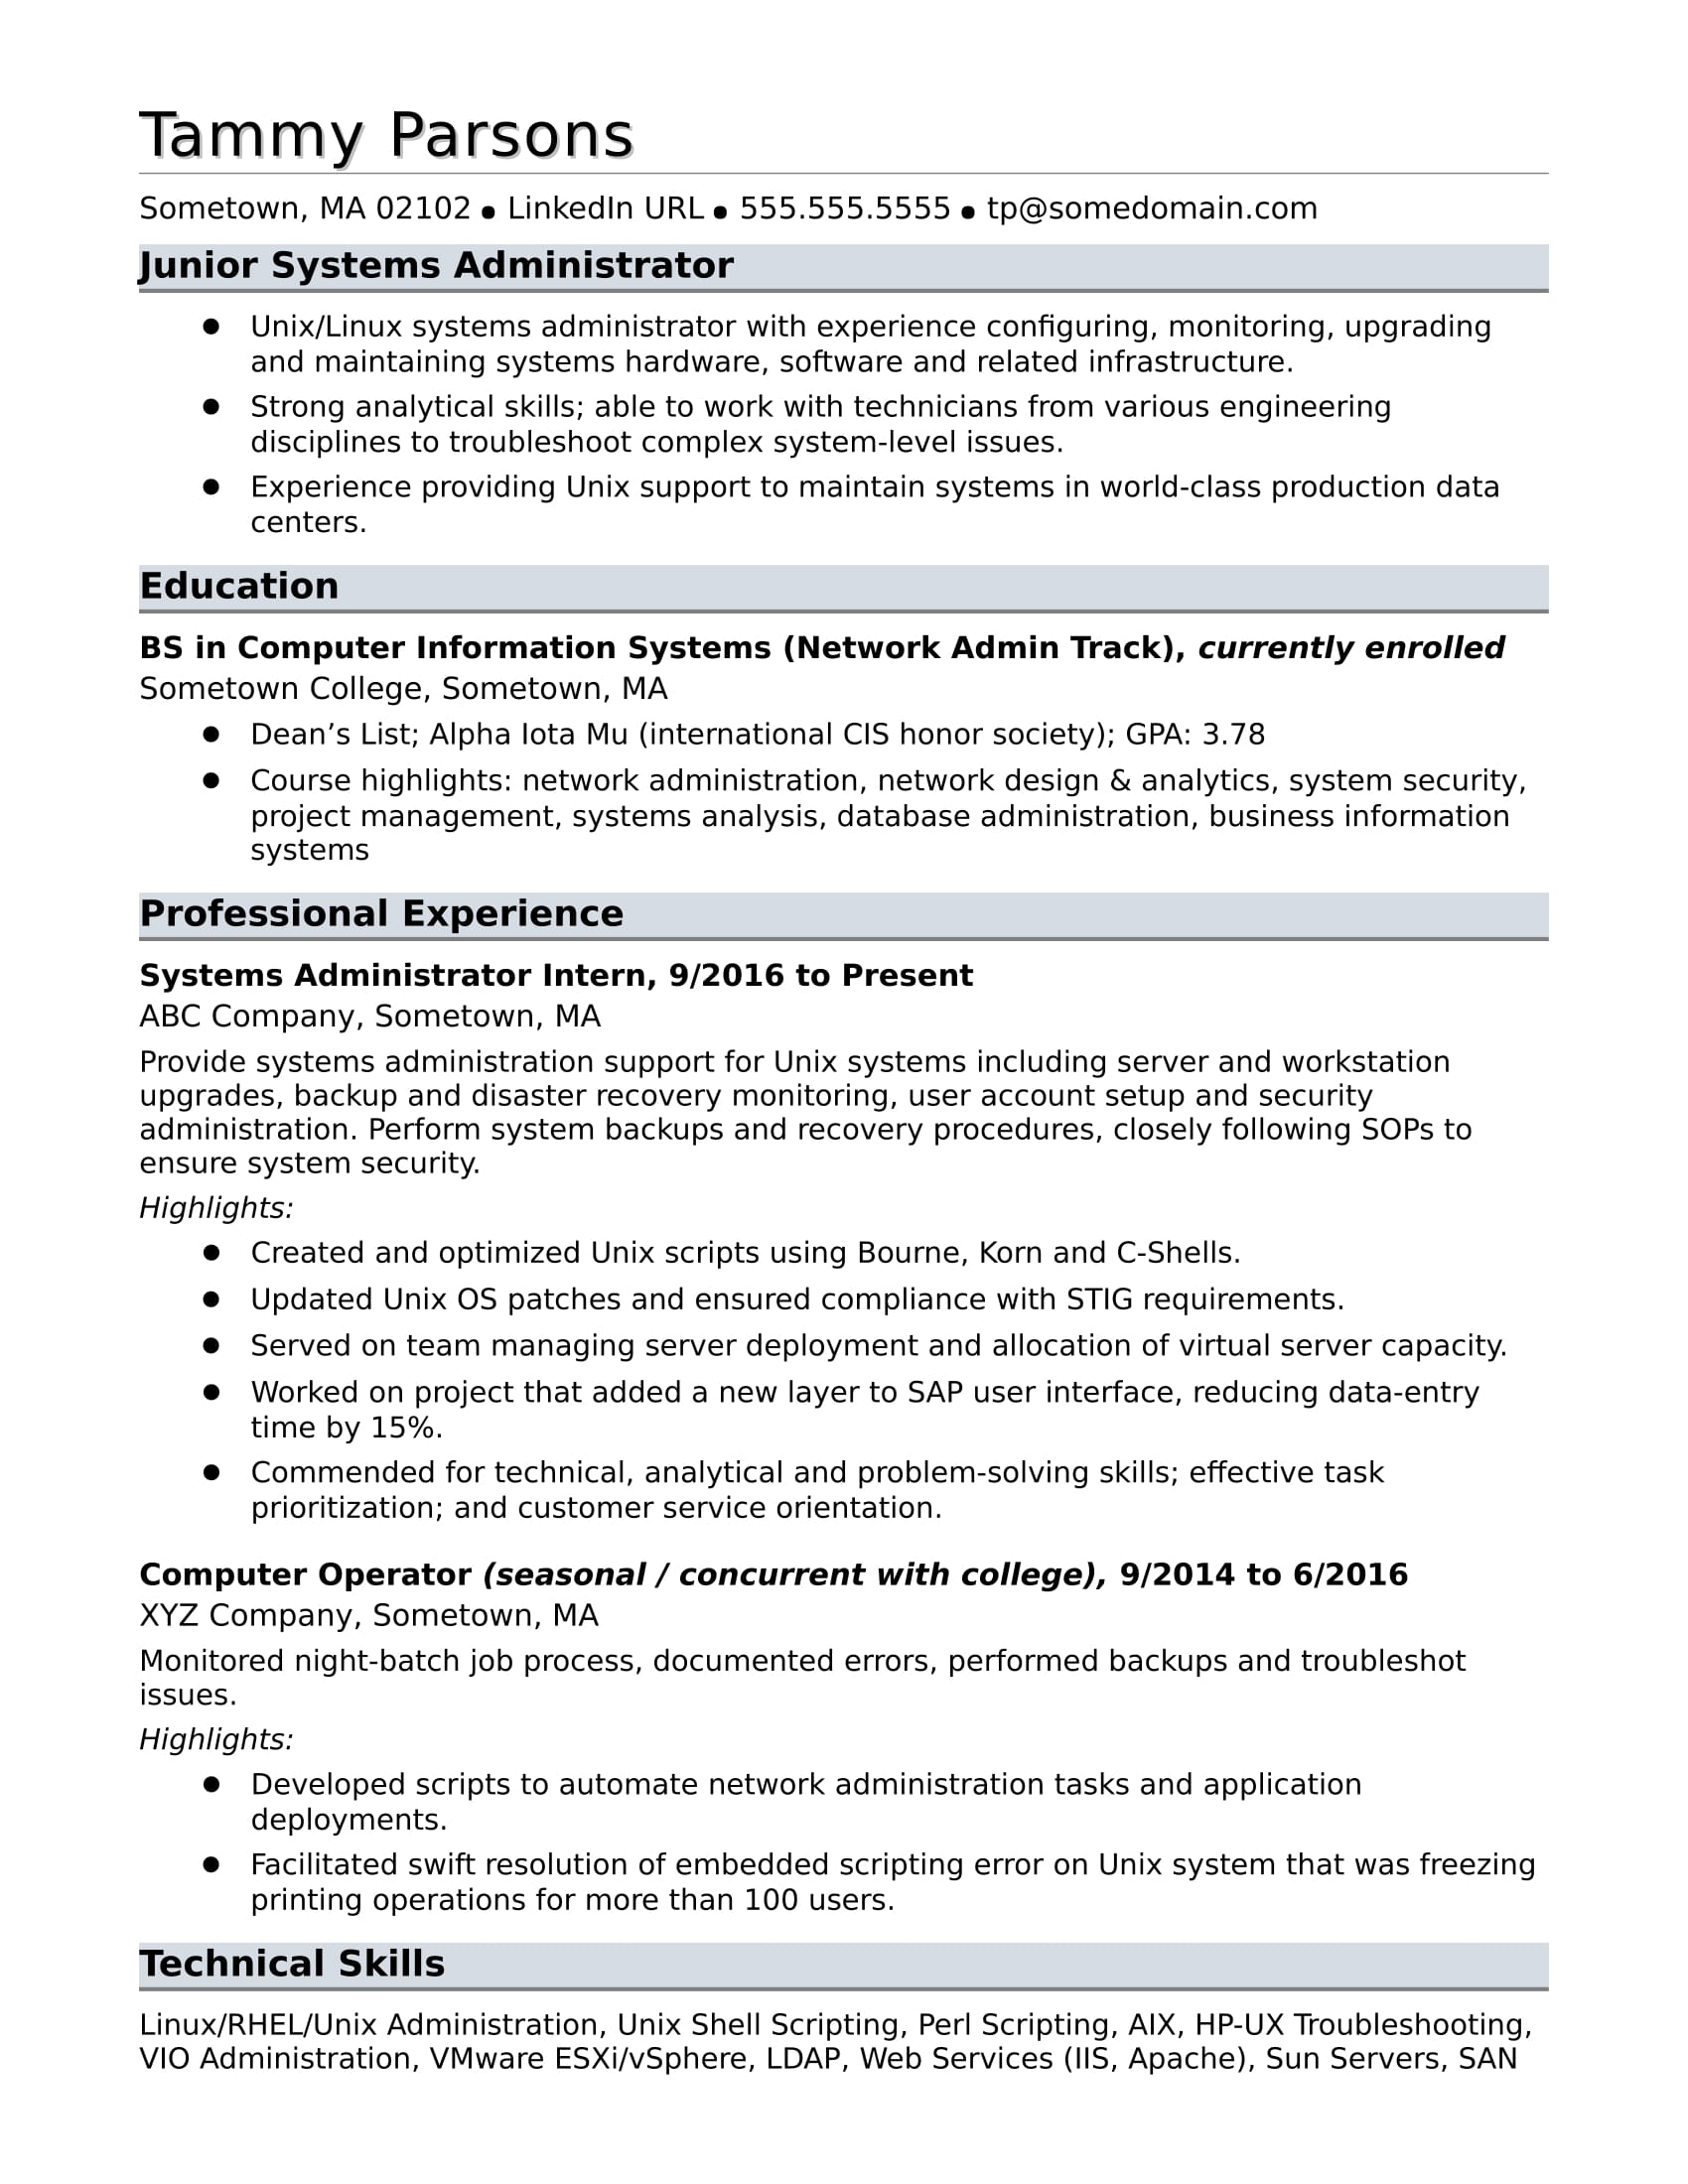 sample resume for an entry level systems administrator monster com